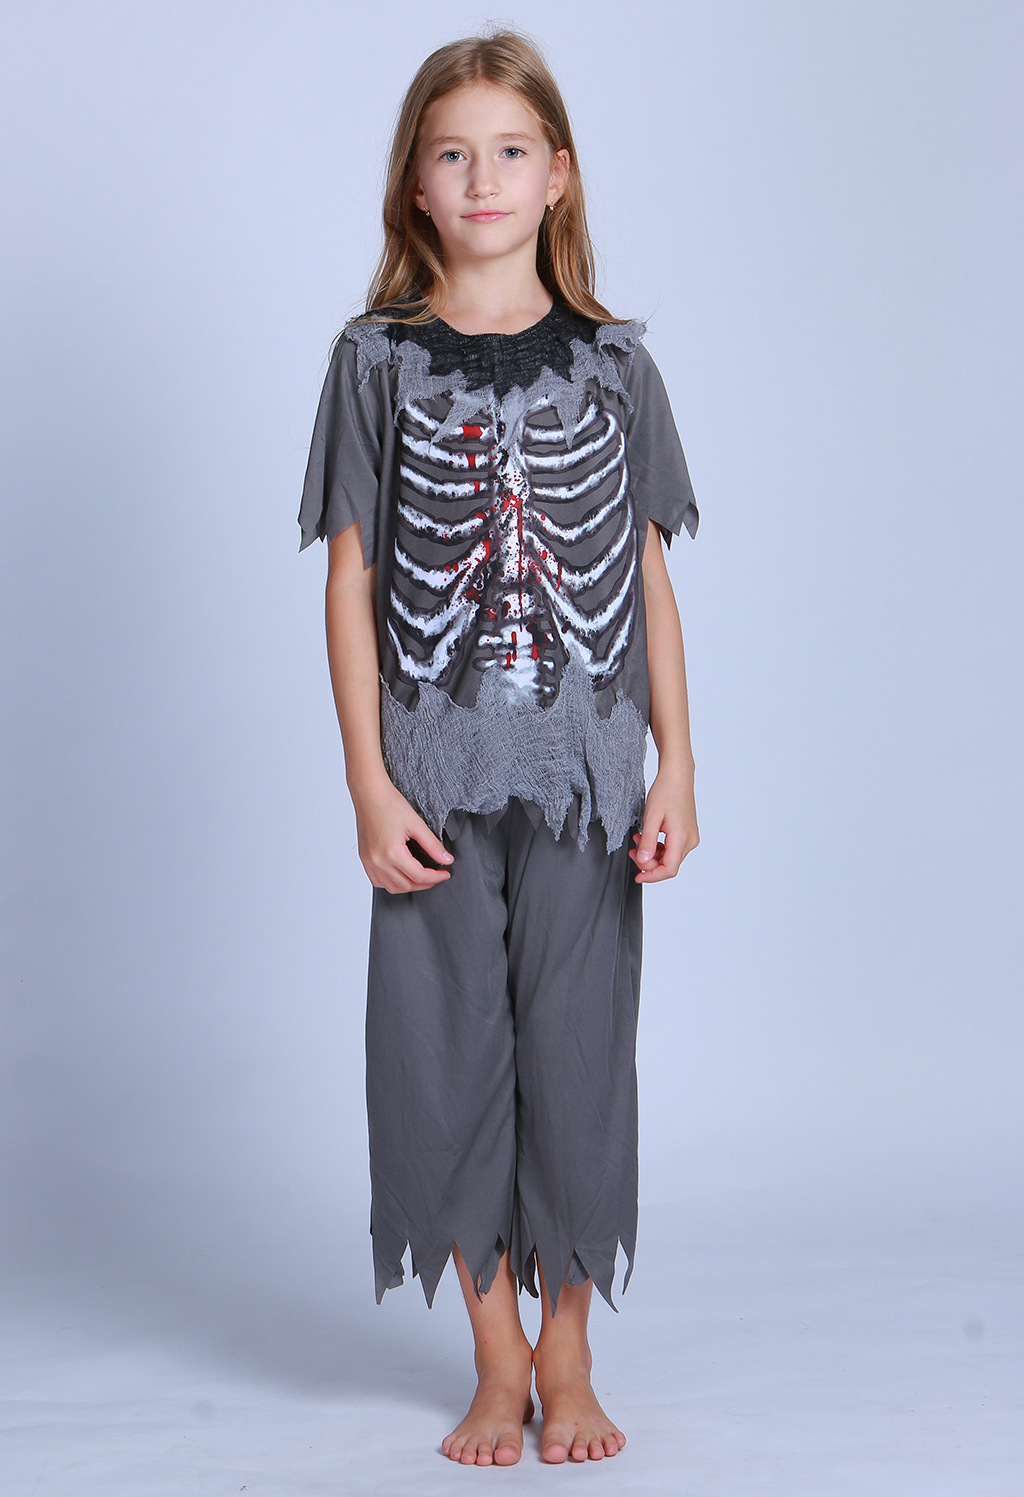 Cross-Border Supply Children's Halloween Costume Zombie Skull Clothing Cosplay Clothing Halloween Theme Suit